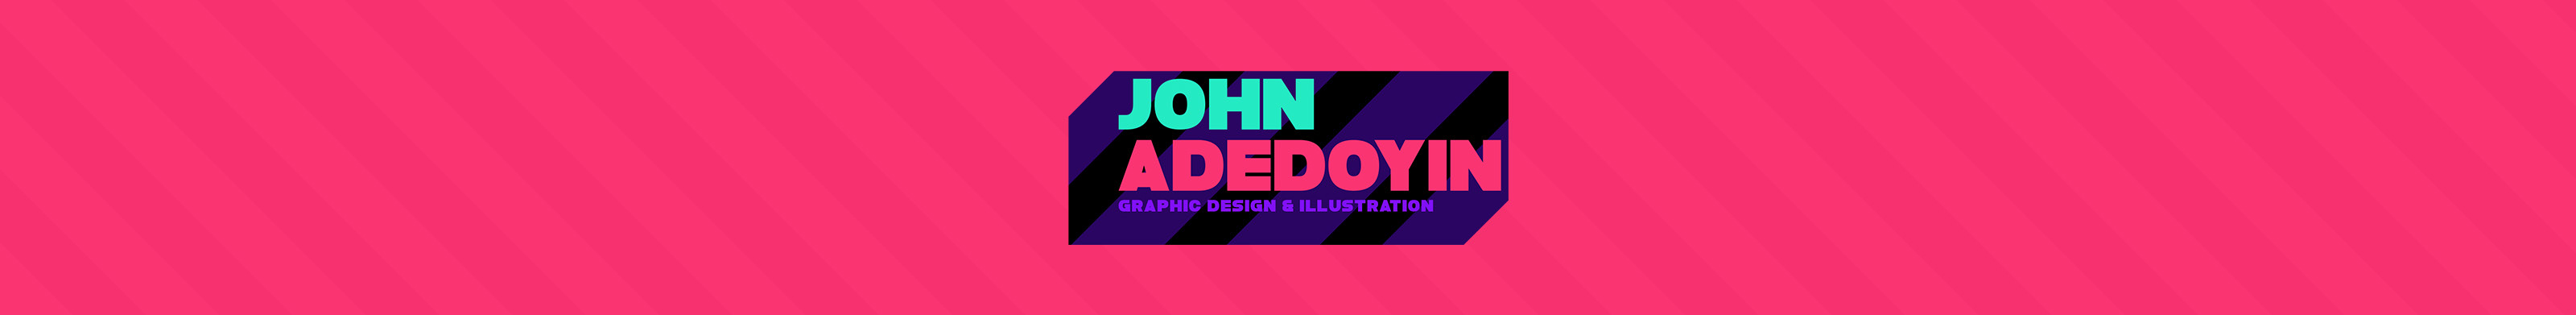 Banner profilu uživatele John Adedoyin